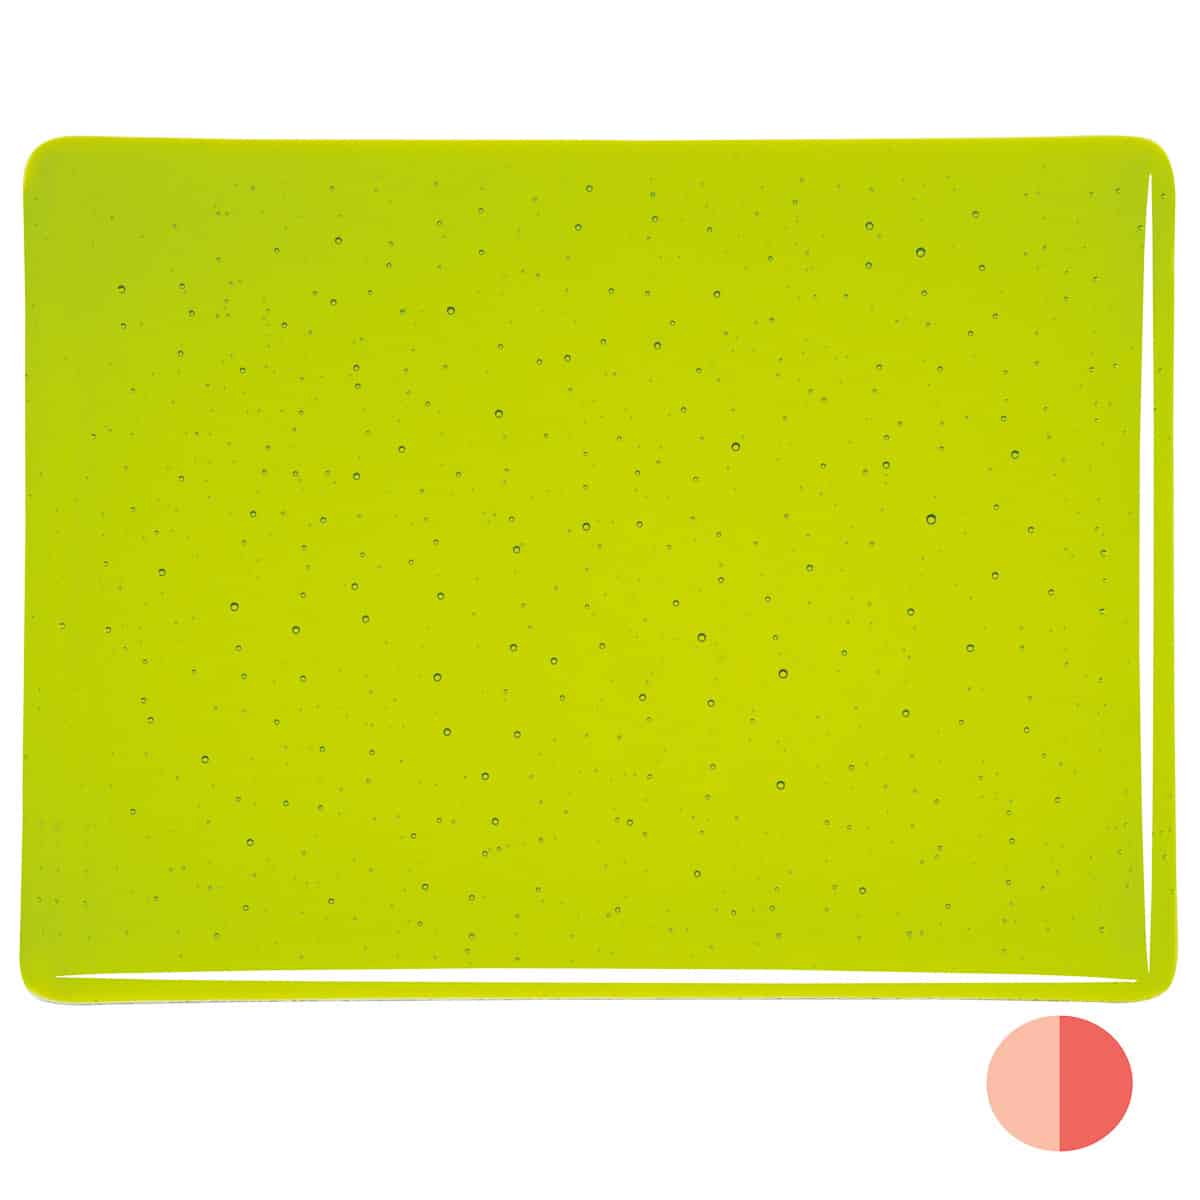 001422 Transparent Lemon Lime Green sheet glass swatch